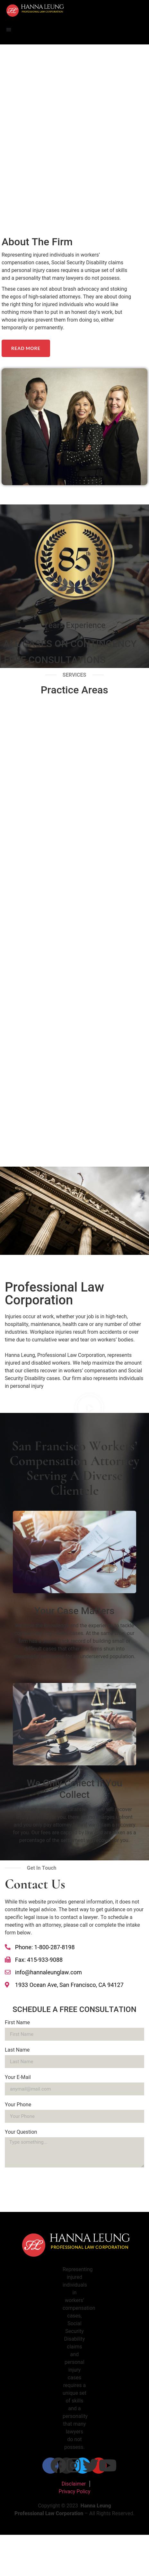 Hanna Leung, Professional Law Corporation - San Francisco CA Lawyers